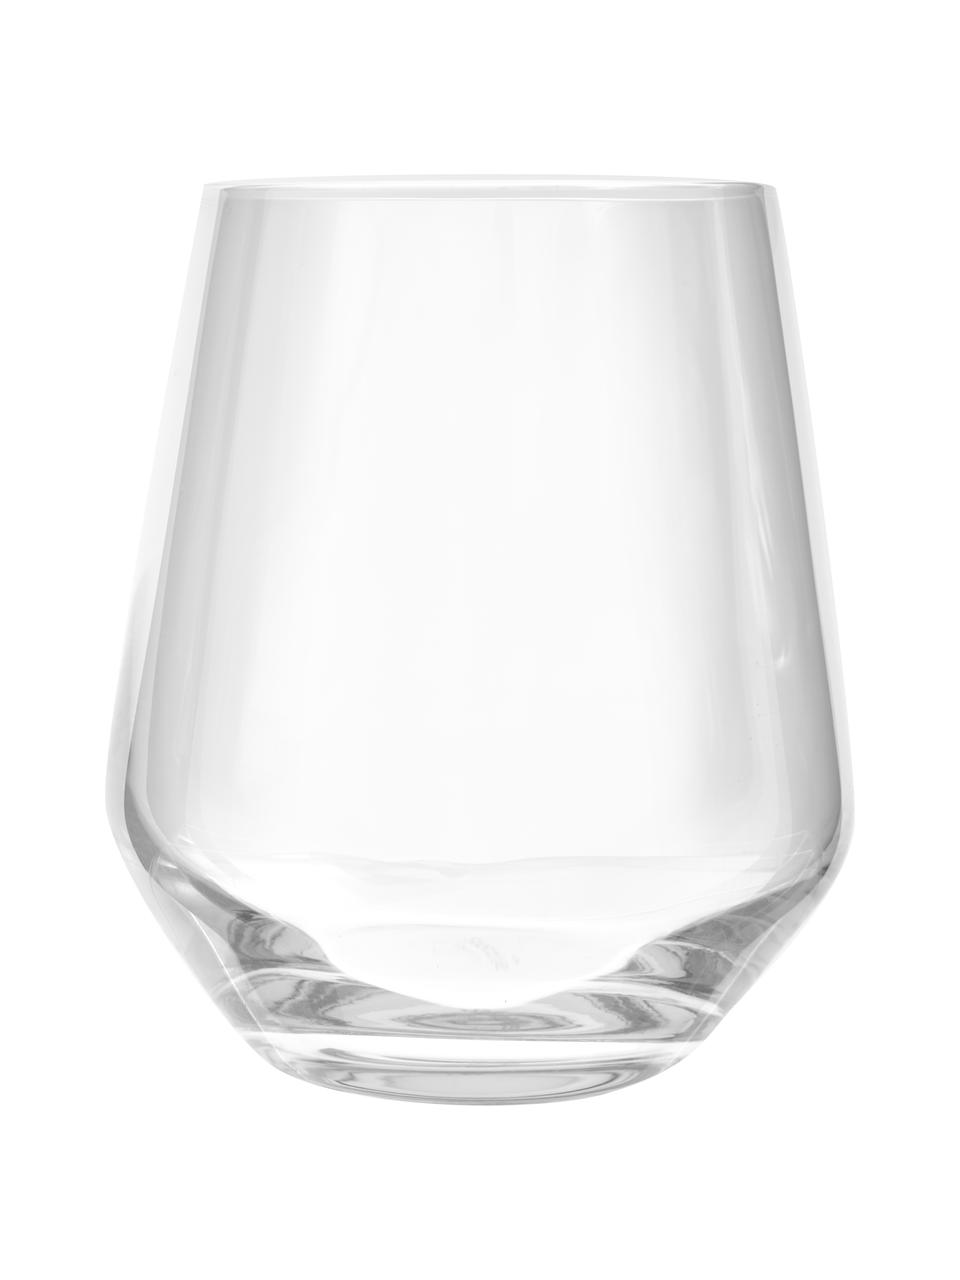 Bauchige Kristallgläser Revolution, 6 Stück, Kristallglas, Transparent, Ø 9 x H 11 cm, 470 ml